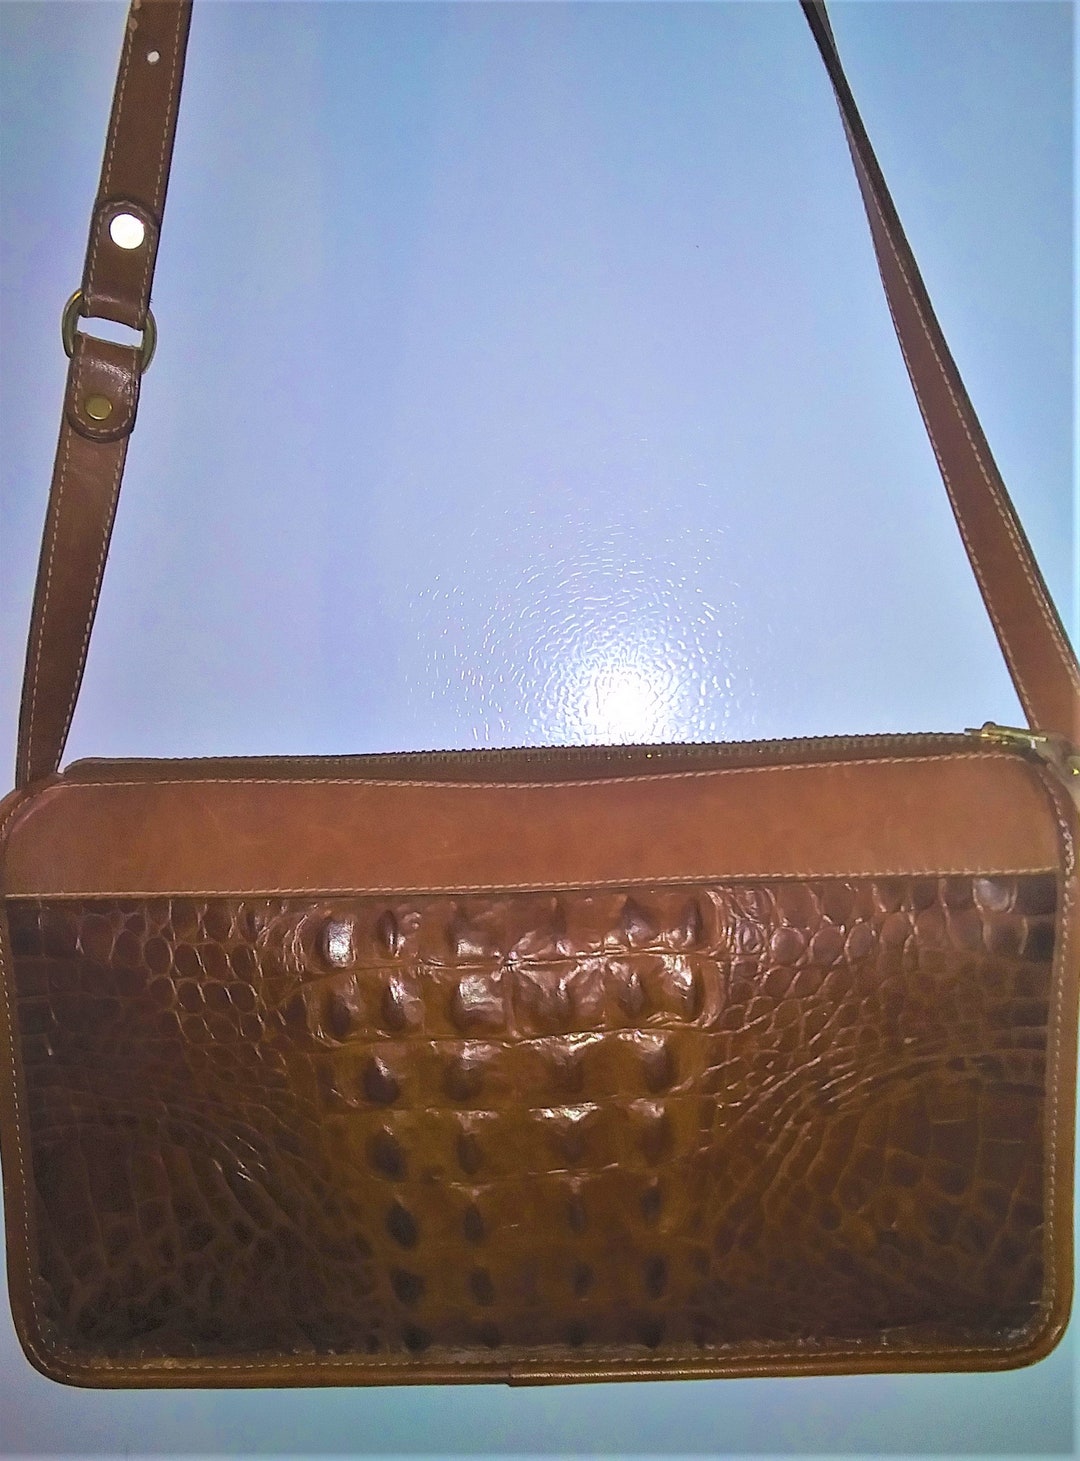 Brahmin Croc Satchel Bag Purse - $140 - From beautiful